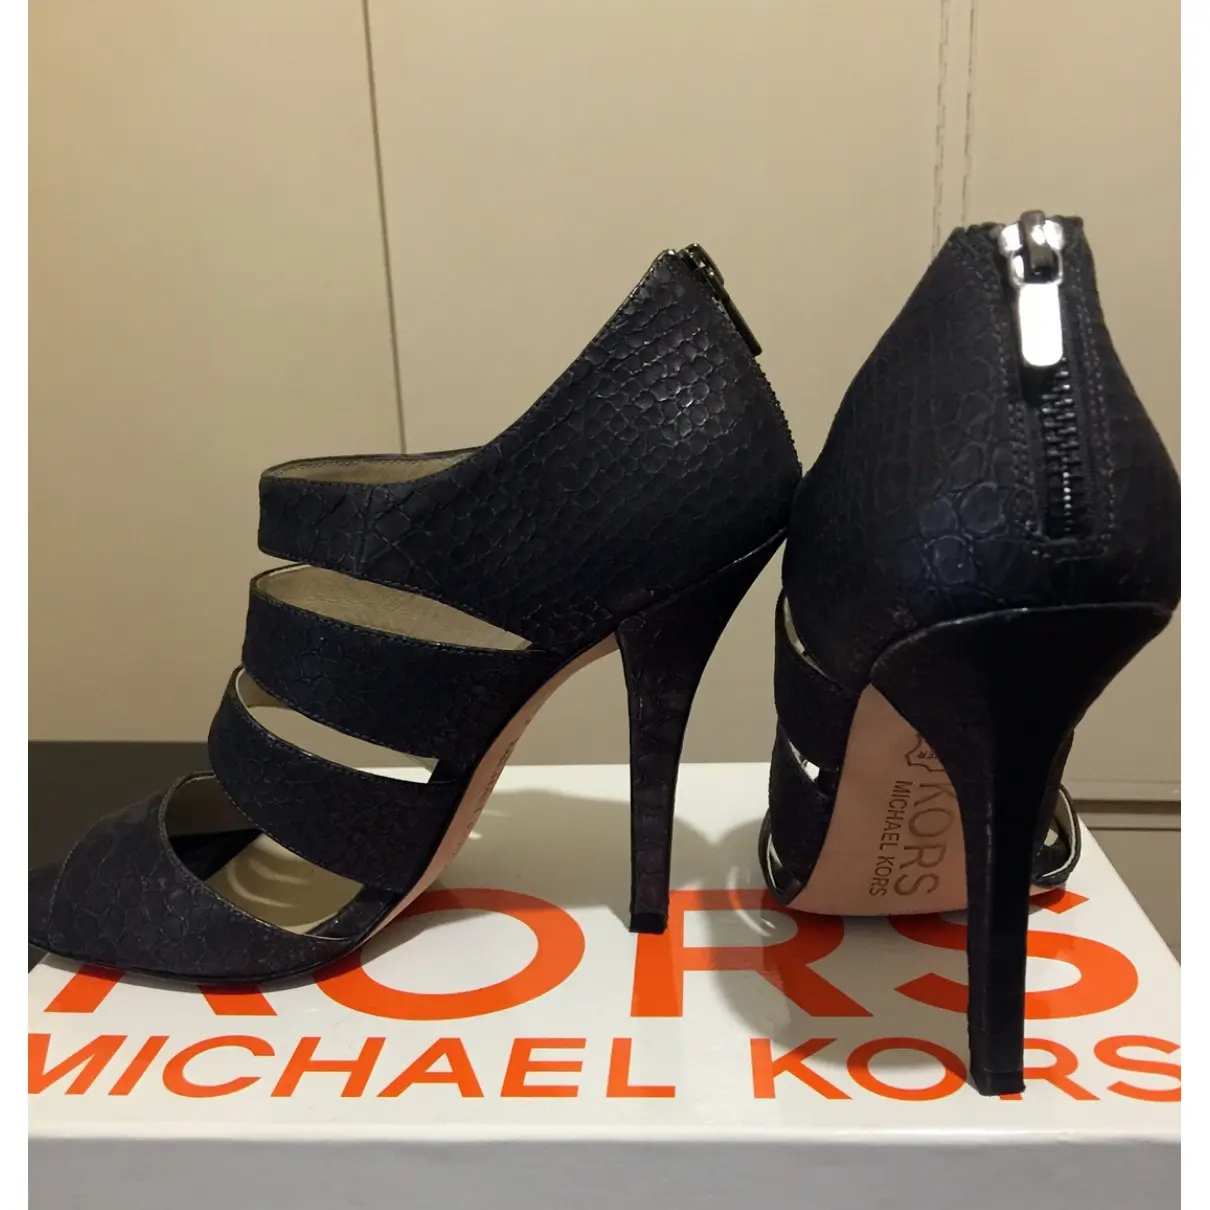 Buy Kors Michael Kors Leather sandals online